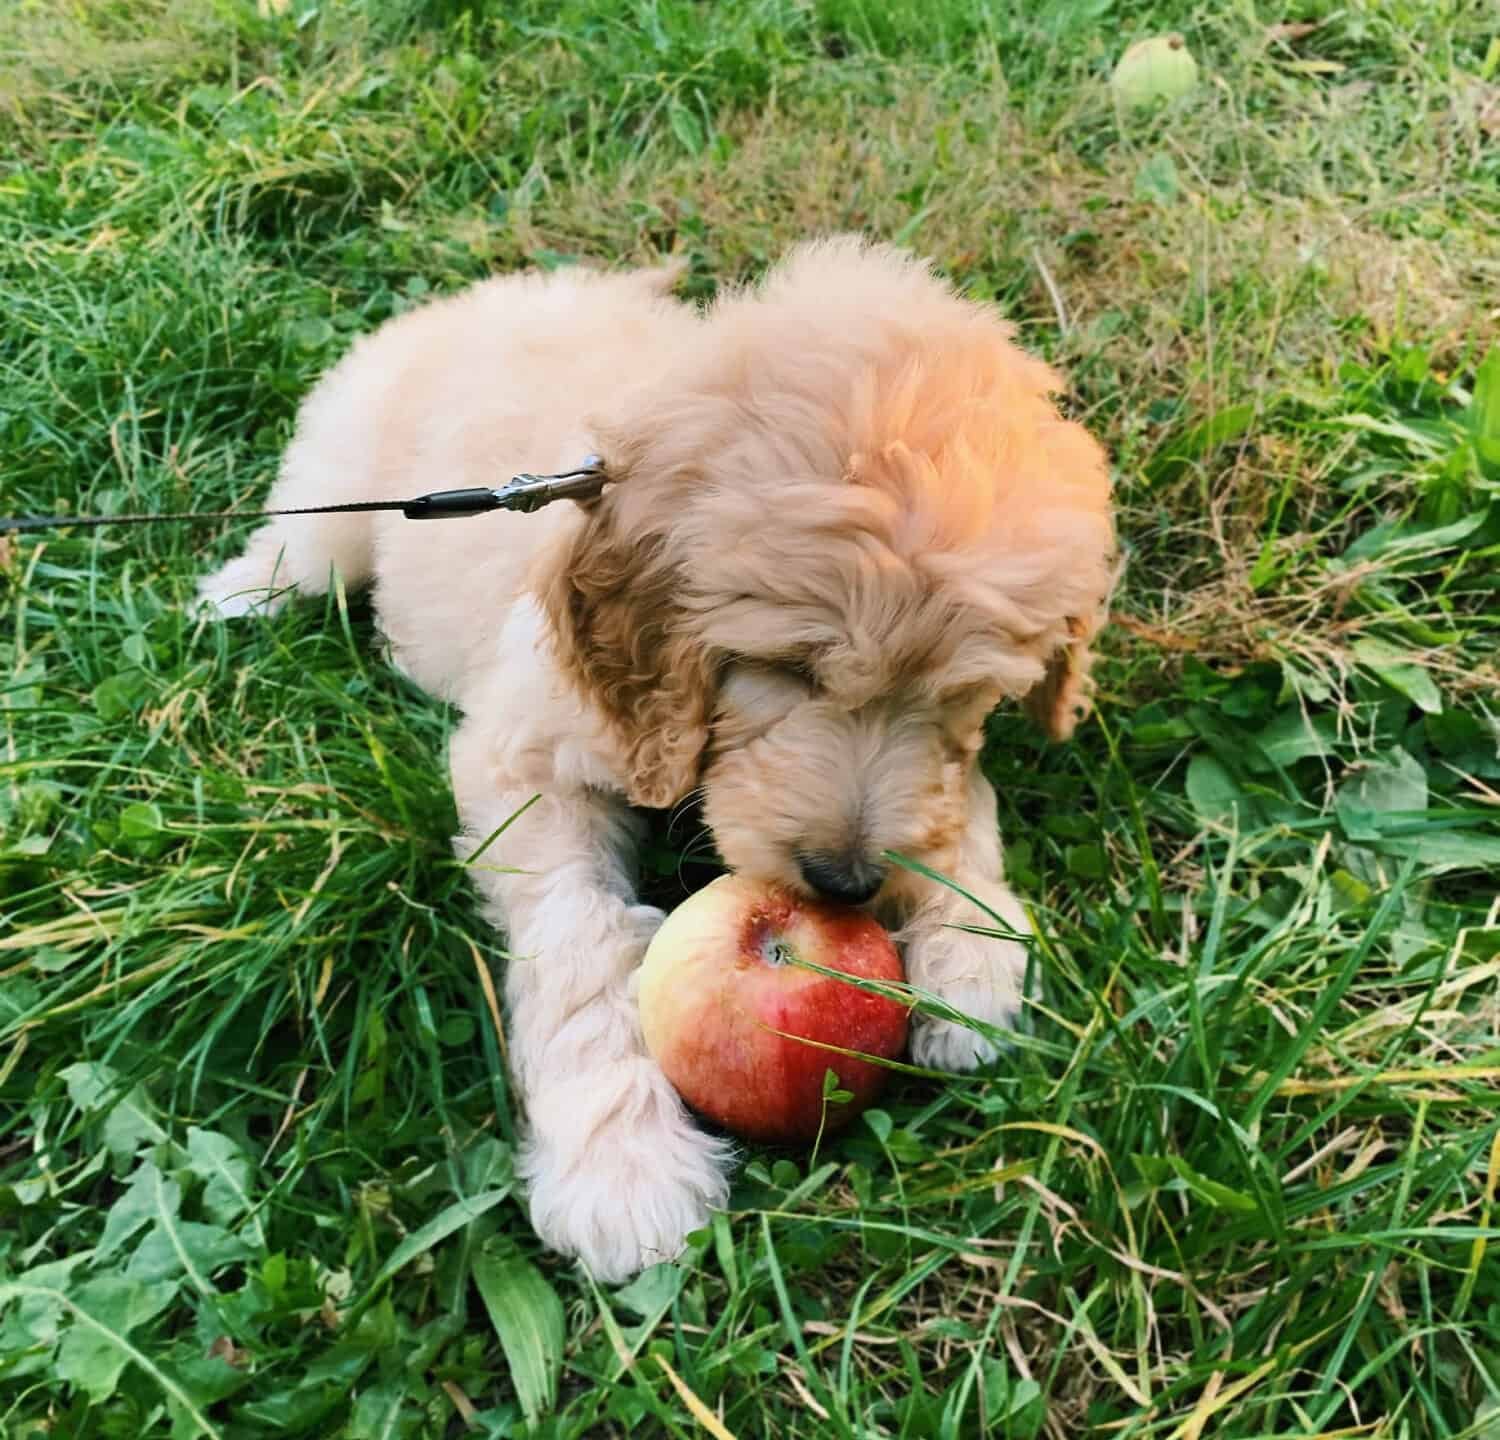 cucciolo di goldendoodle mangia una mela per la prima volta